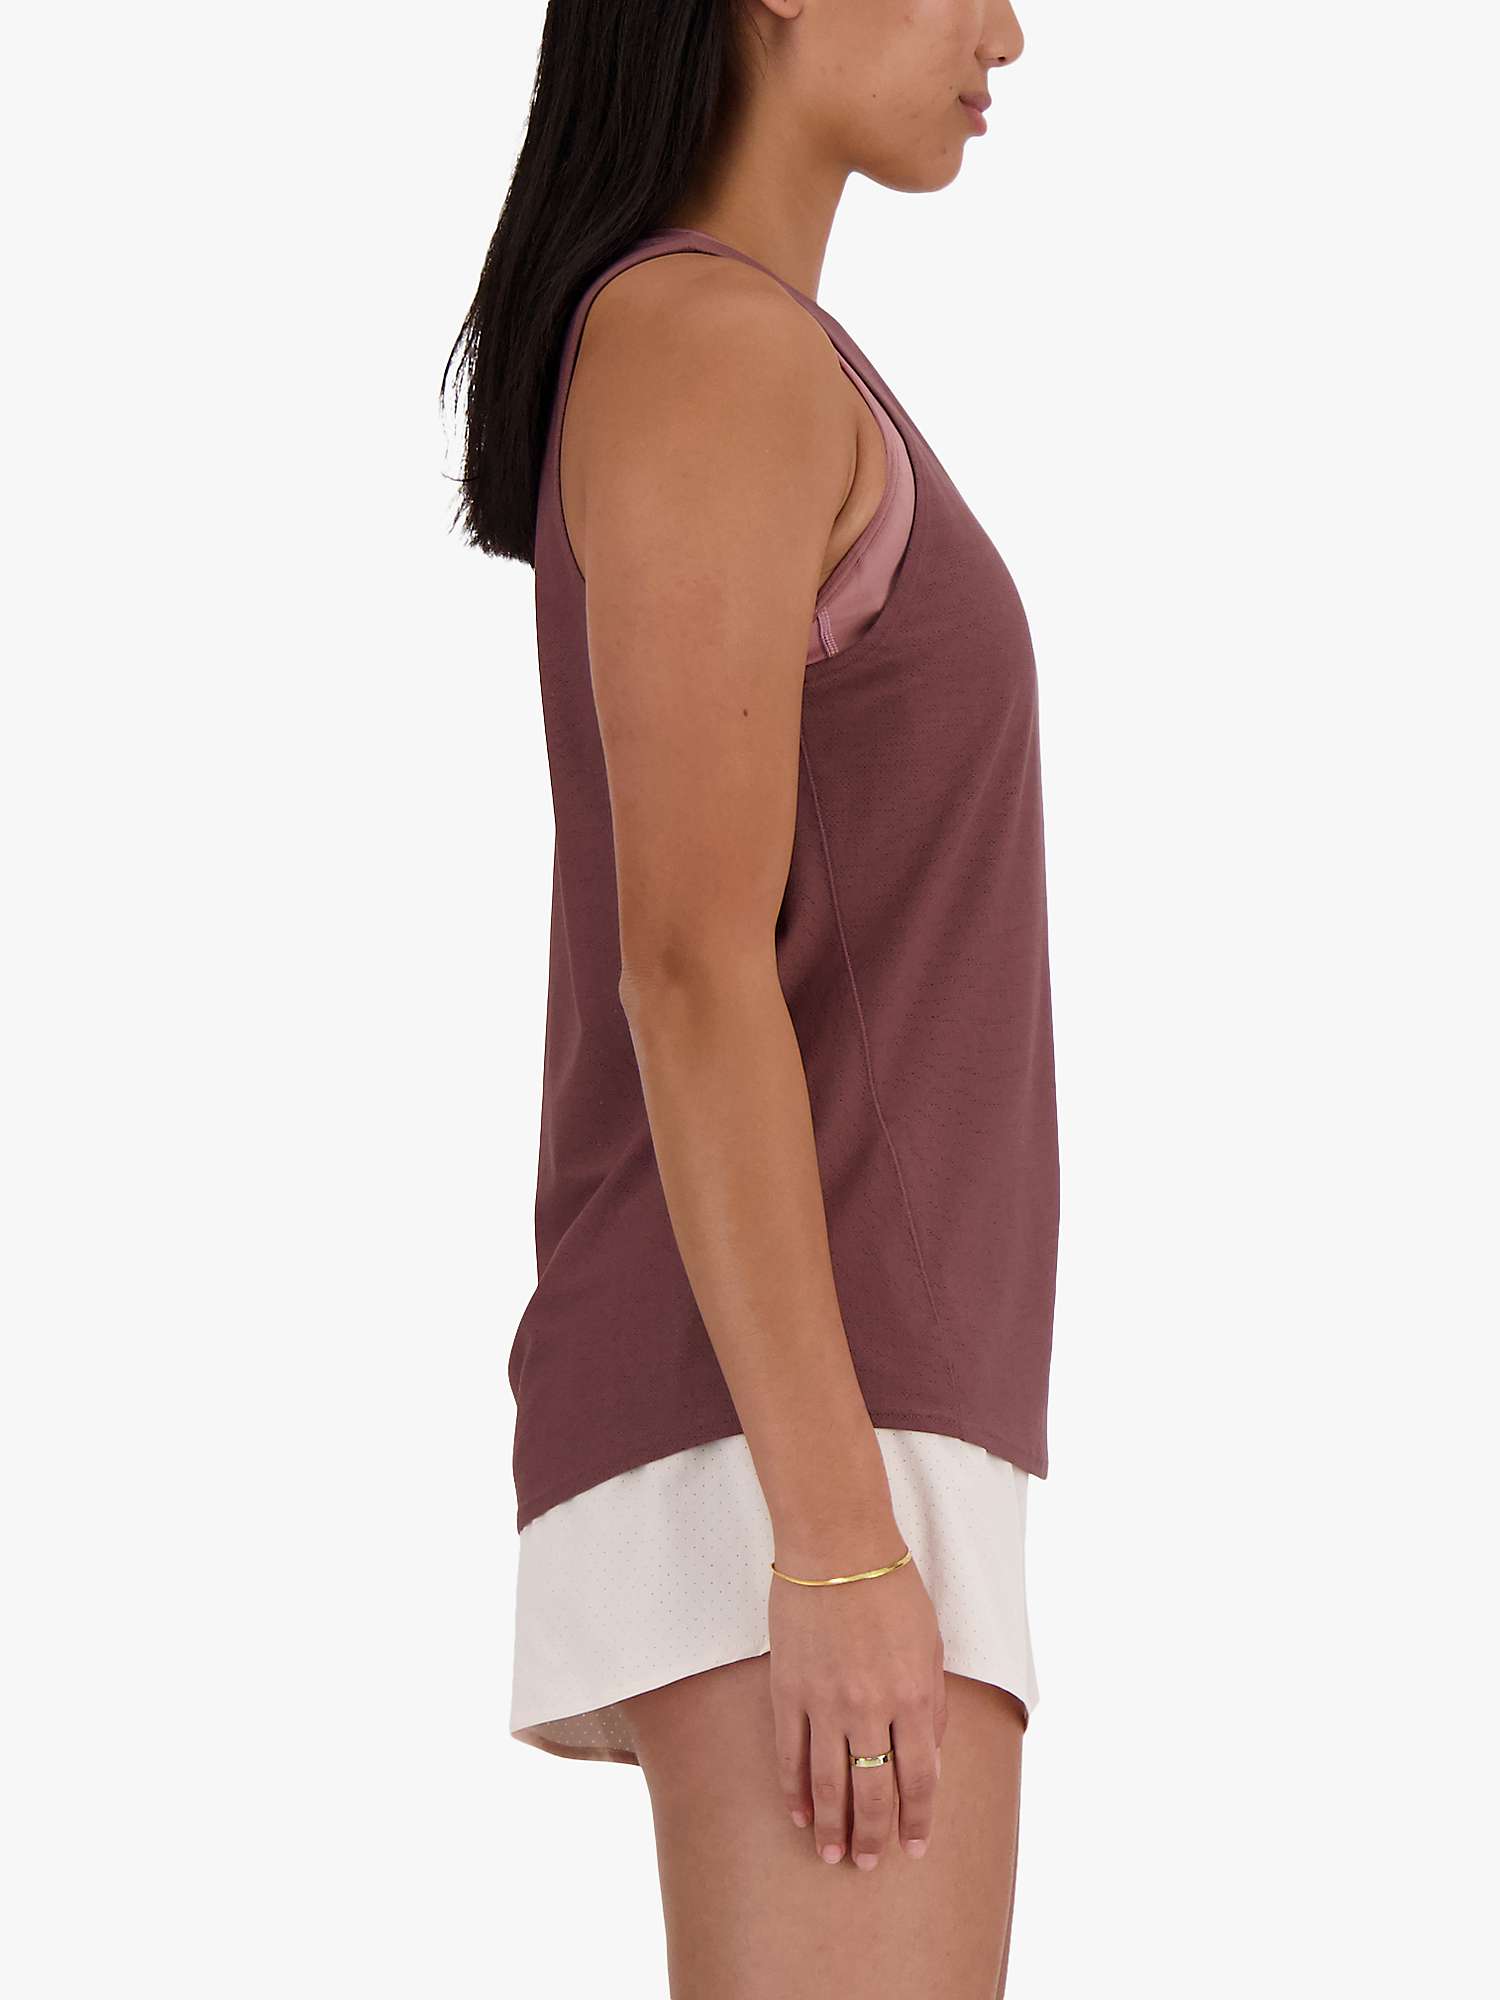 Buy New Balance Breathable Women's Tank Top, Liquorice Online at johnlewis.com